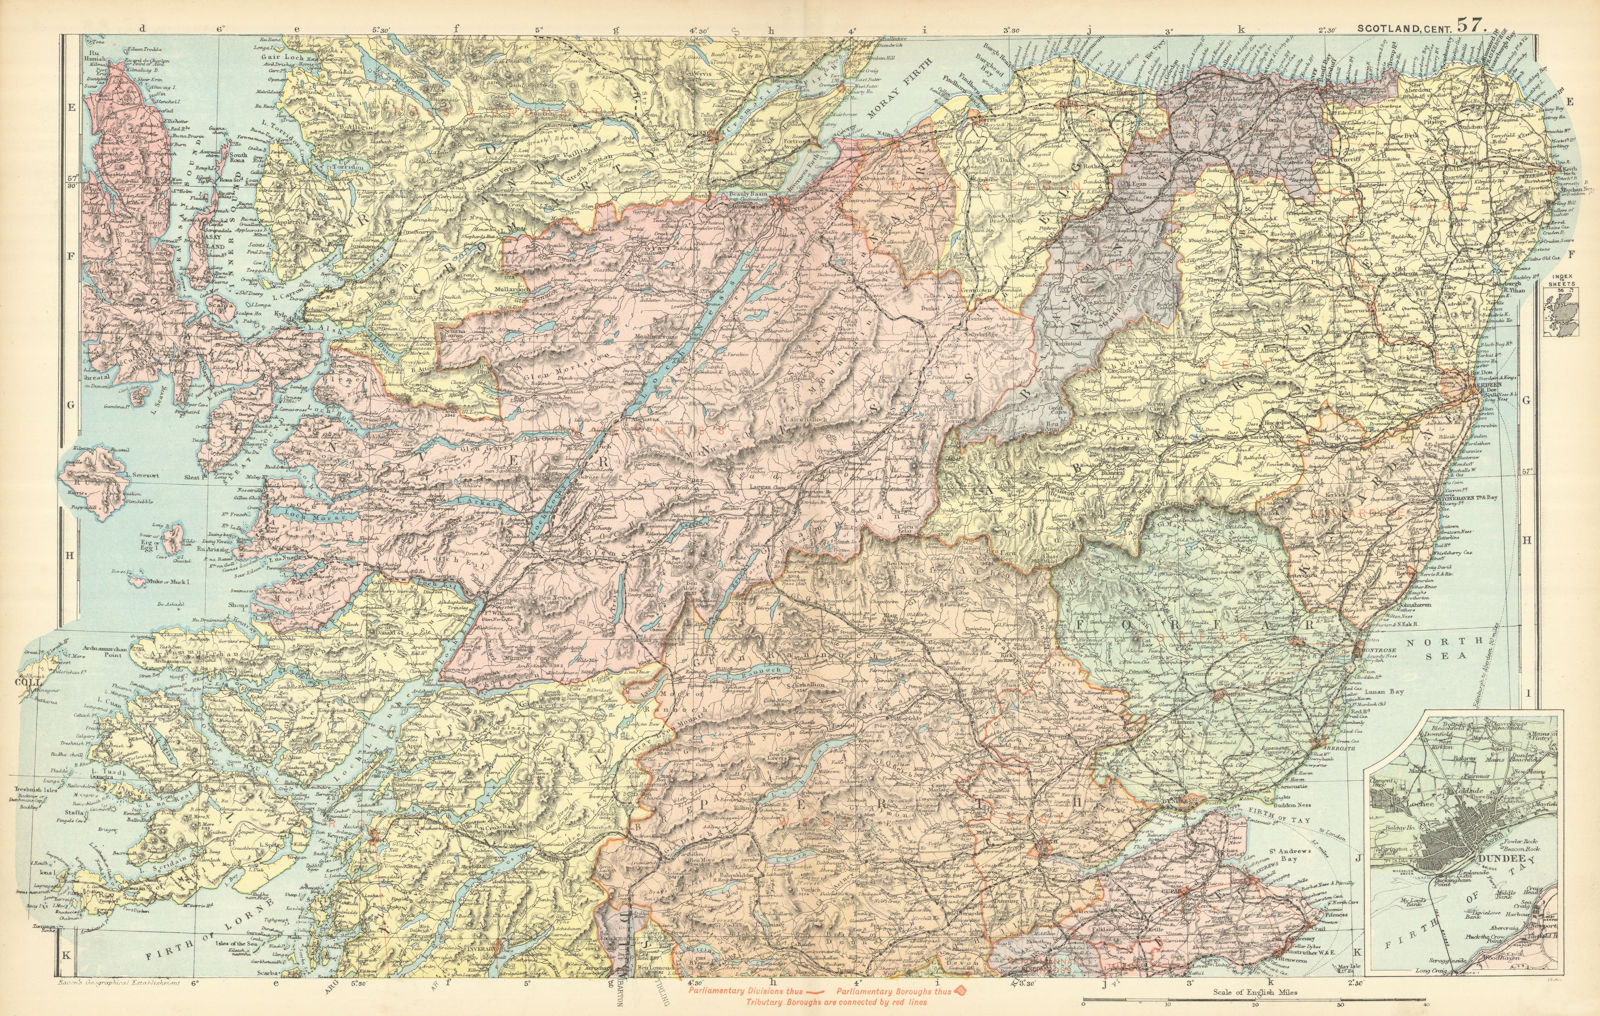 SCOTLAND CENTRAL Tayside Grampian Highland.Parliamentary Railways.BACON 1898 map